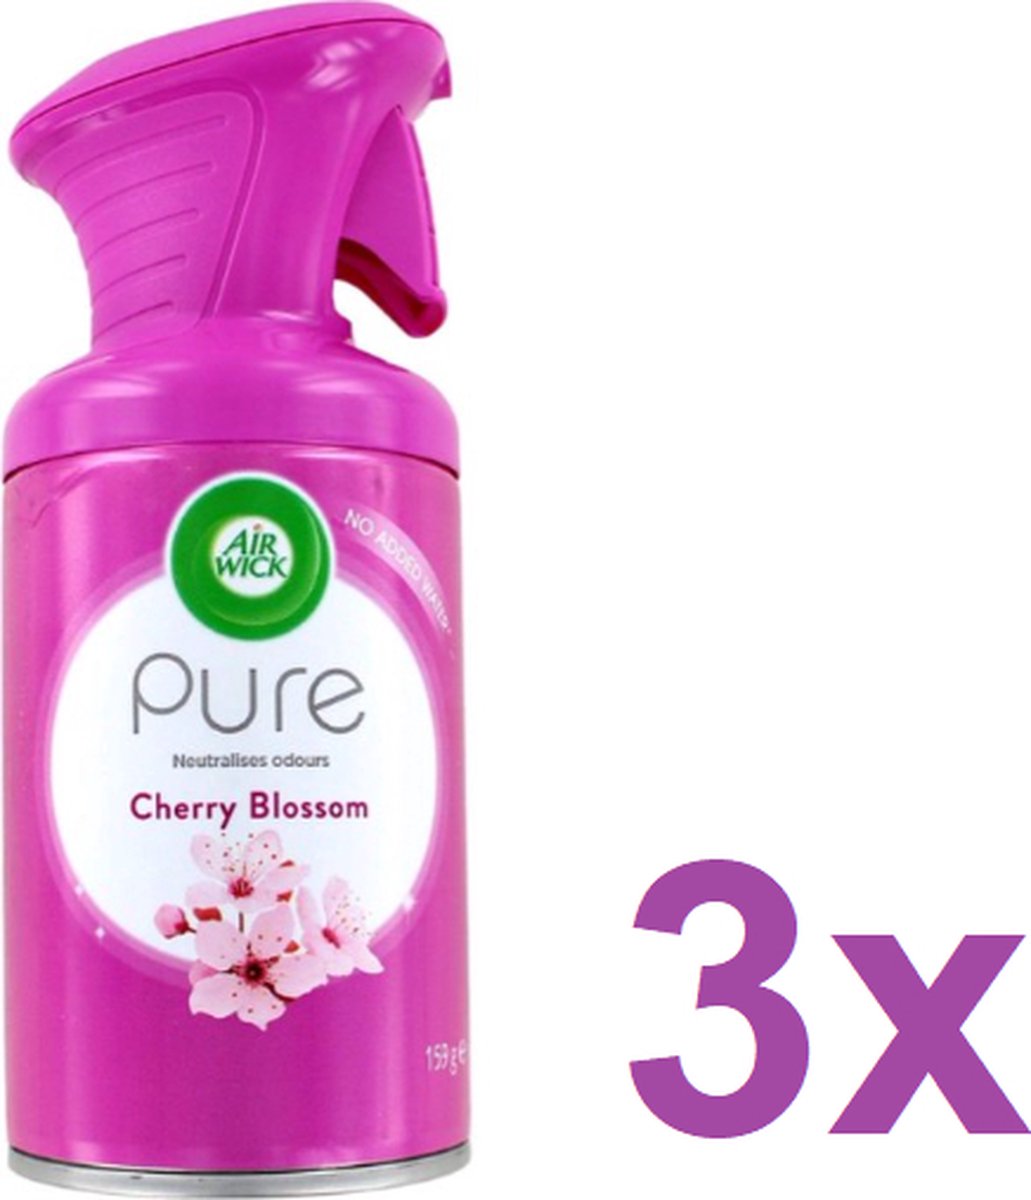 Air Wick Luchtverfrisser Spray - Pure Aziatische Kersenbloesem 250 ml x3